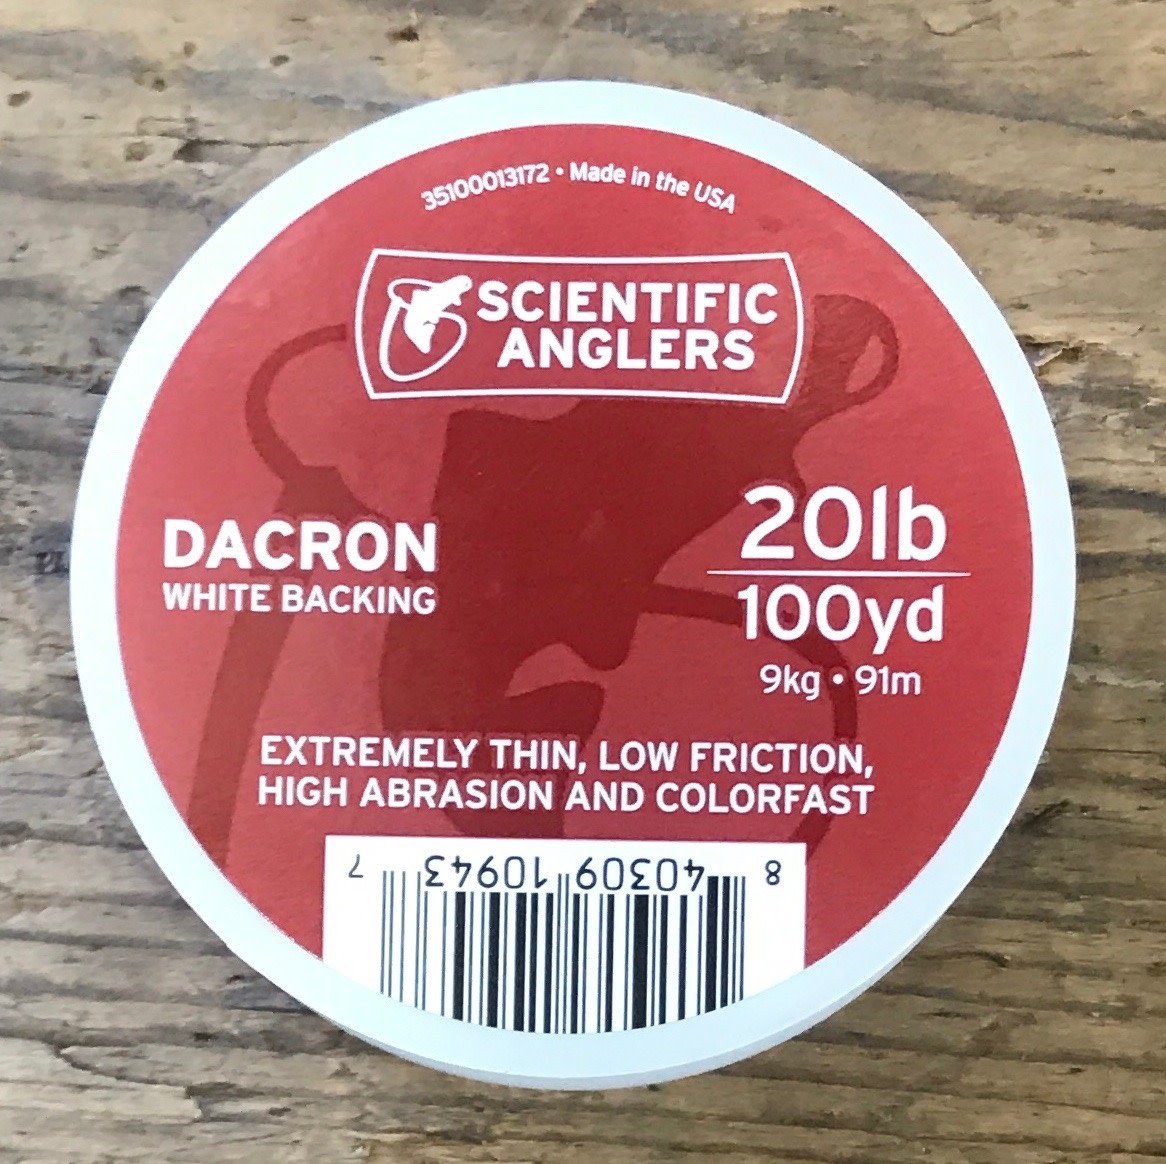 Scientific Angler Scientific Anglers Dacron Backing 20LB White 100 yd